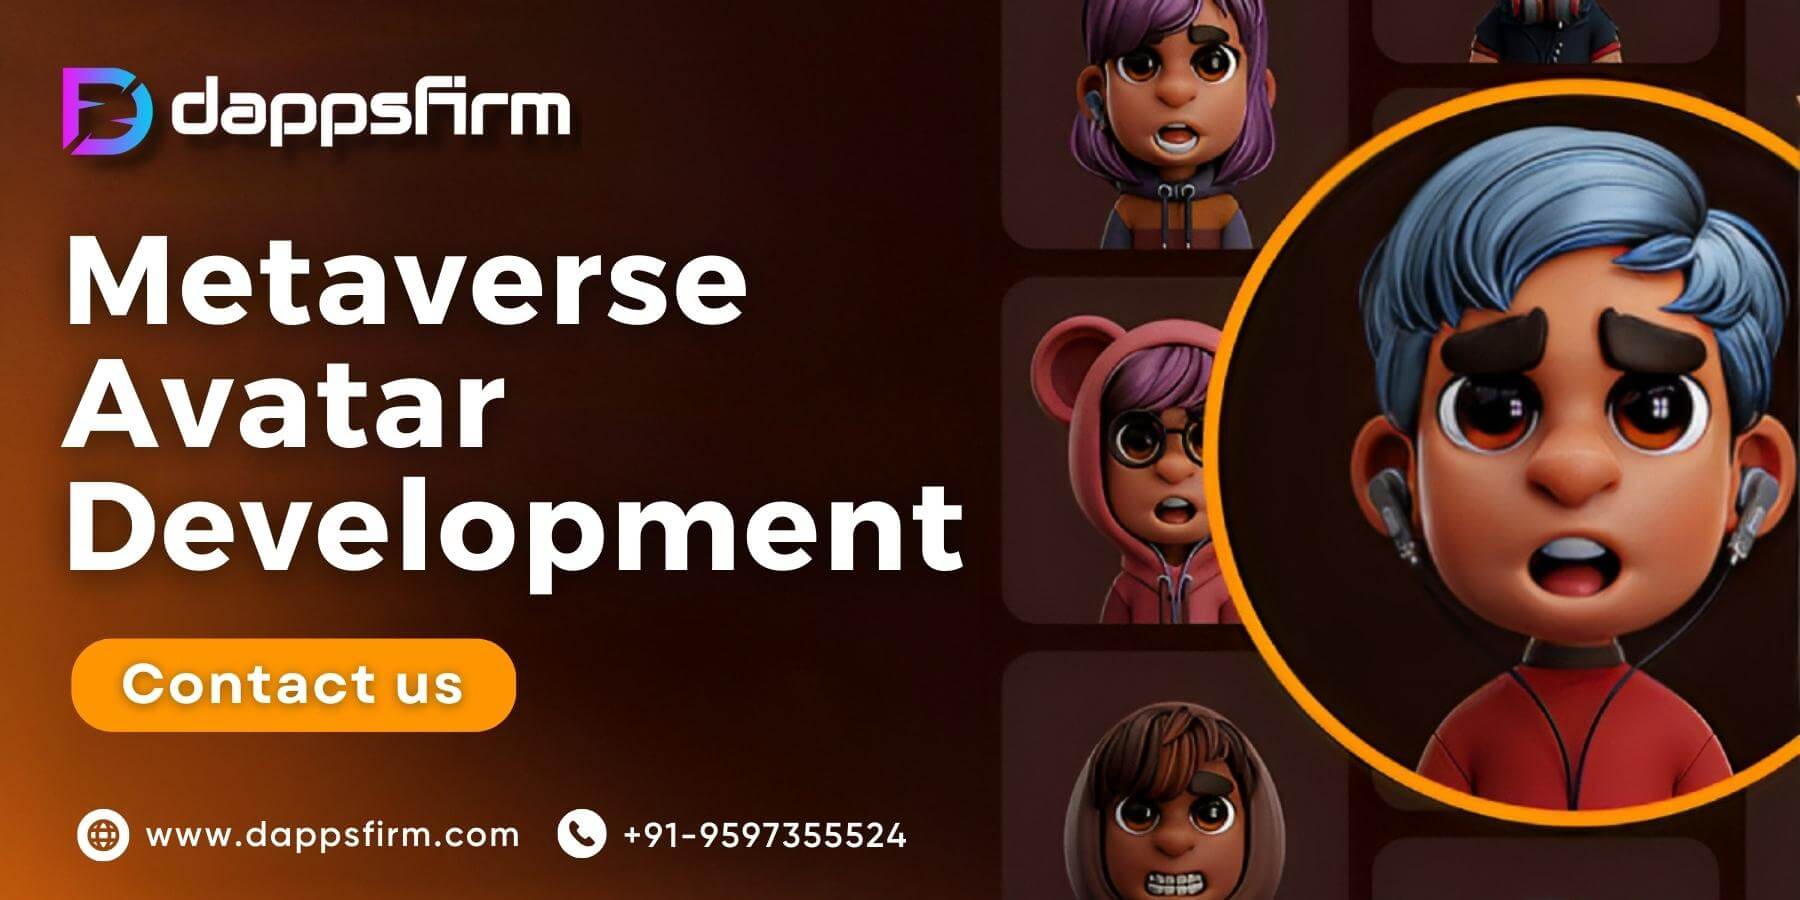 Metaverse Avatar Development - Enhance Your Metaverse Presence with Custom Avatars